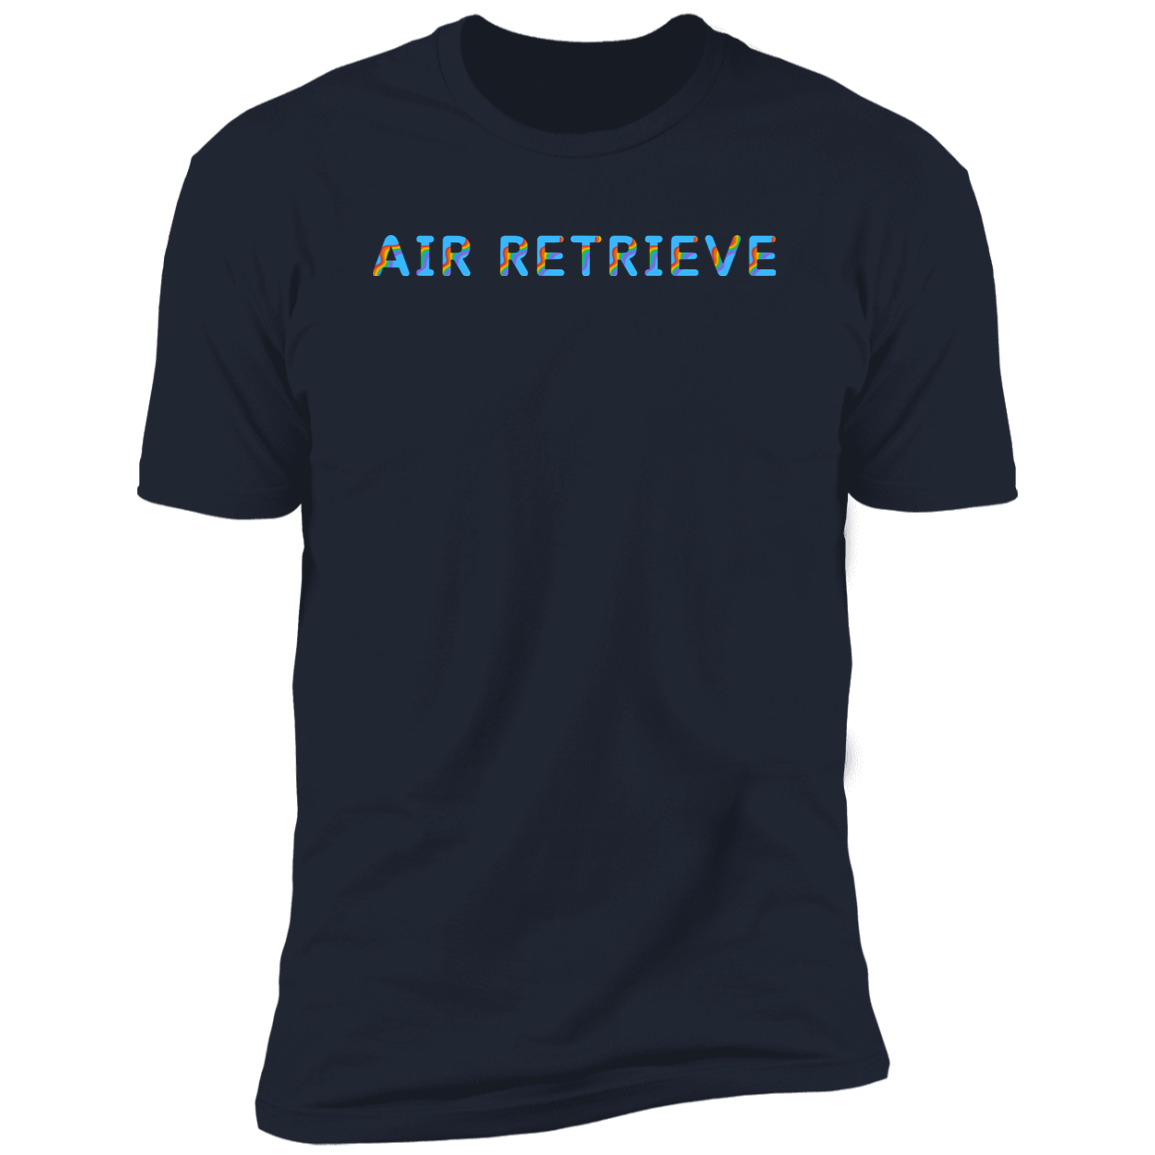 Air Retrieve Pride Dock diving t-shirt, dog pride air retrieve dock diving shirt for humans, in navy blue